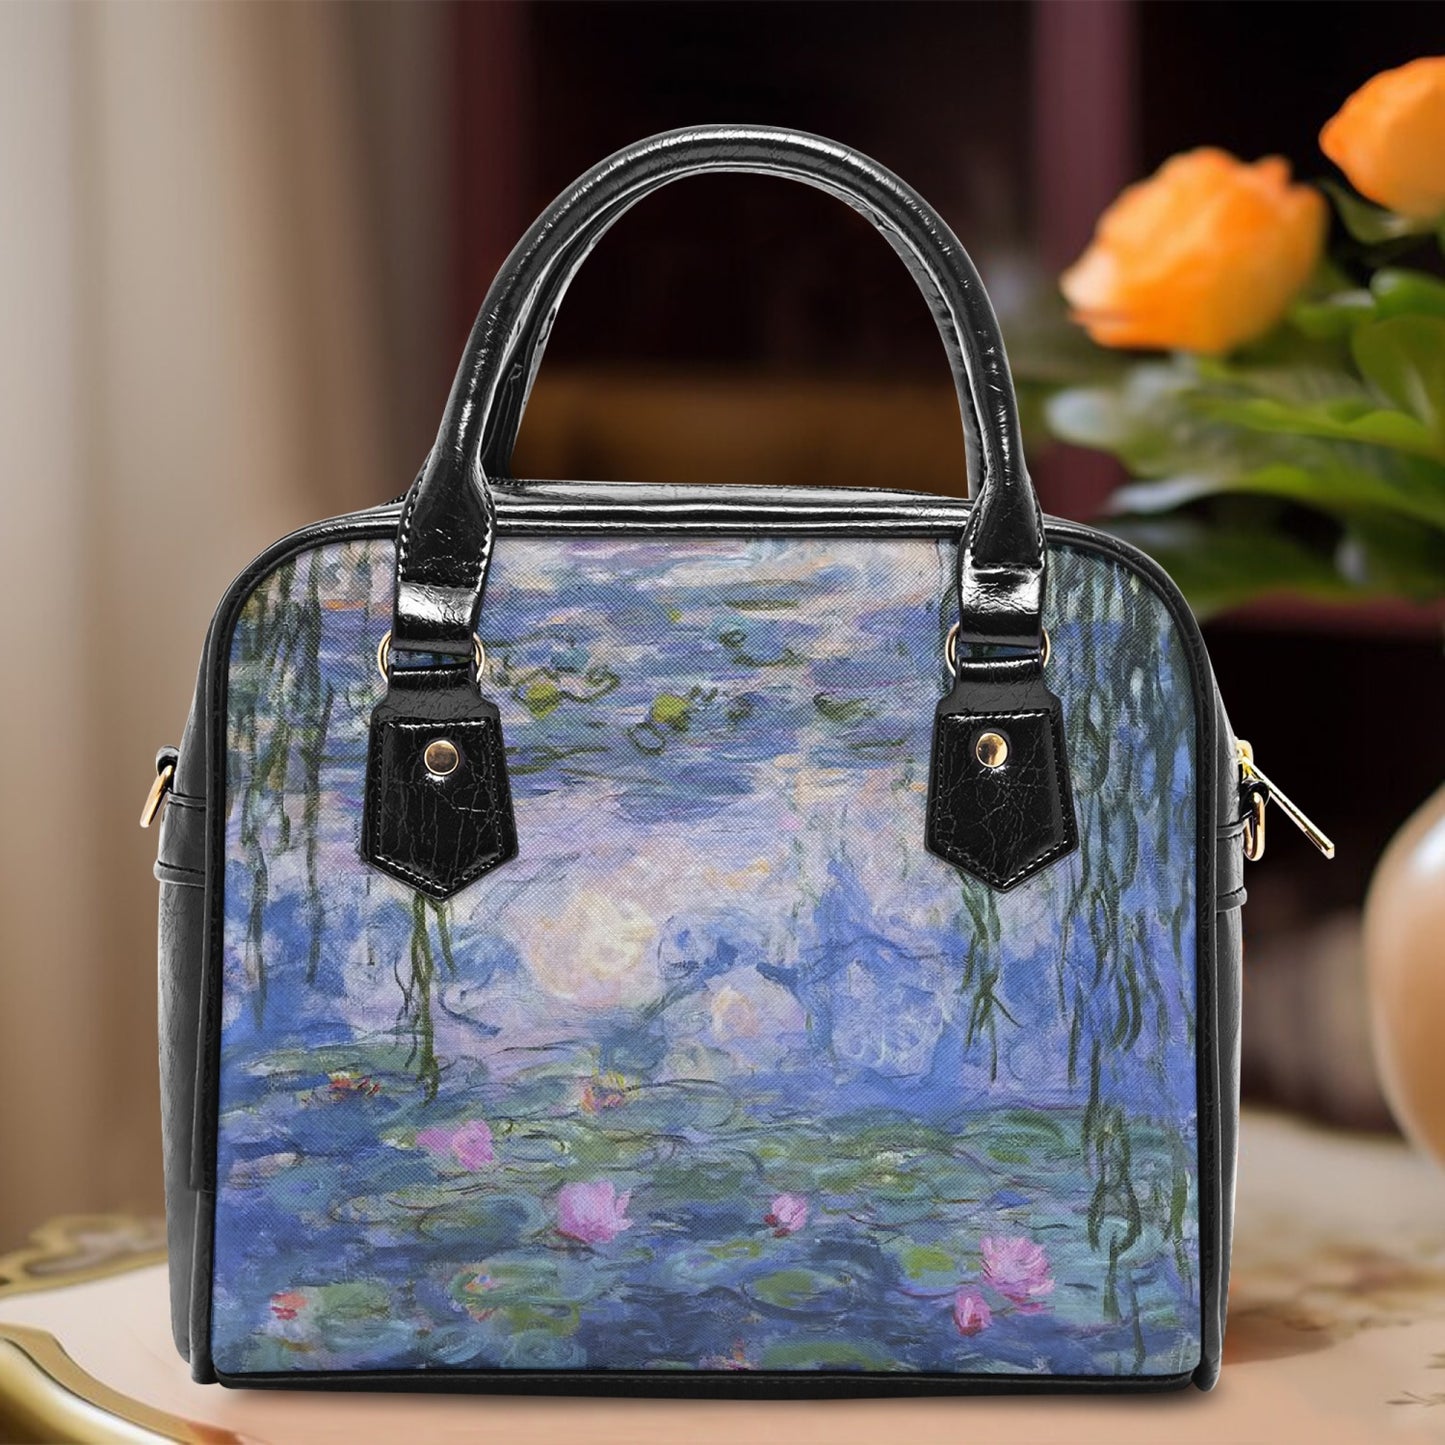 Monet Lillies Shoulder Purse - Gift for Art Lover - The Lilies by Claude Monet (JPHBMON)